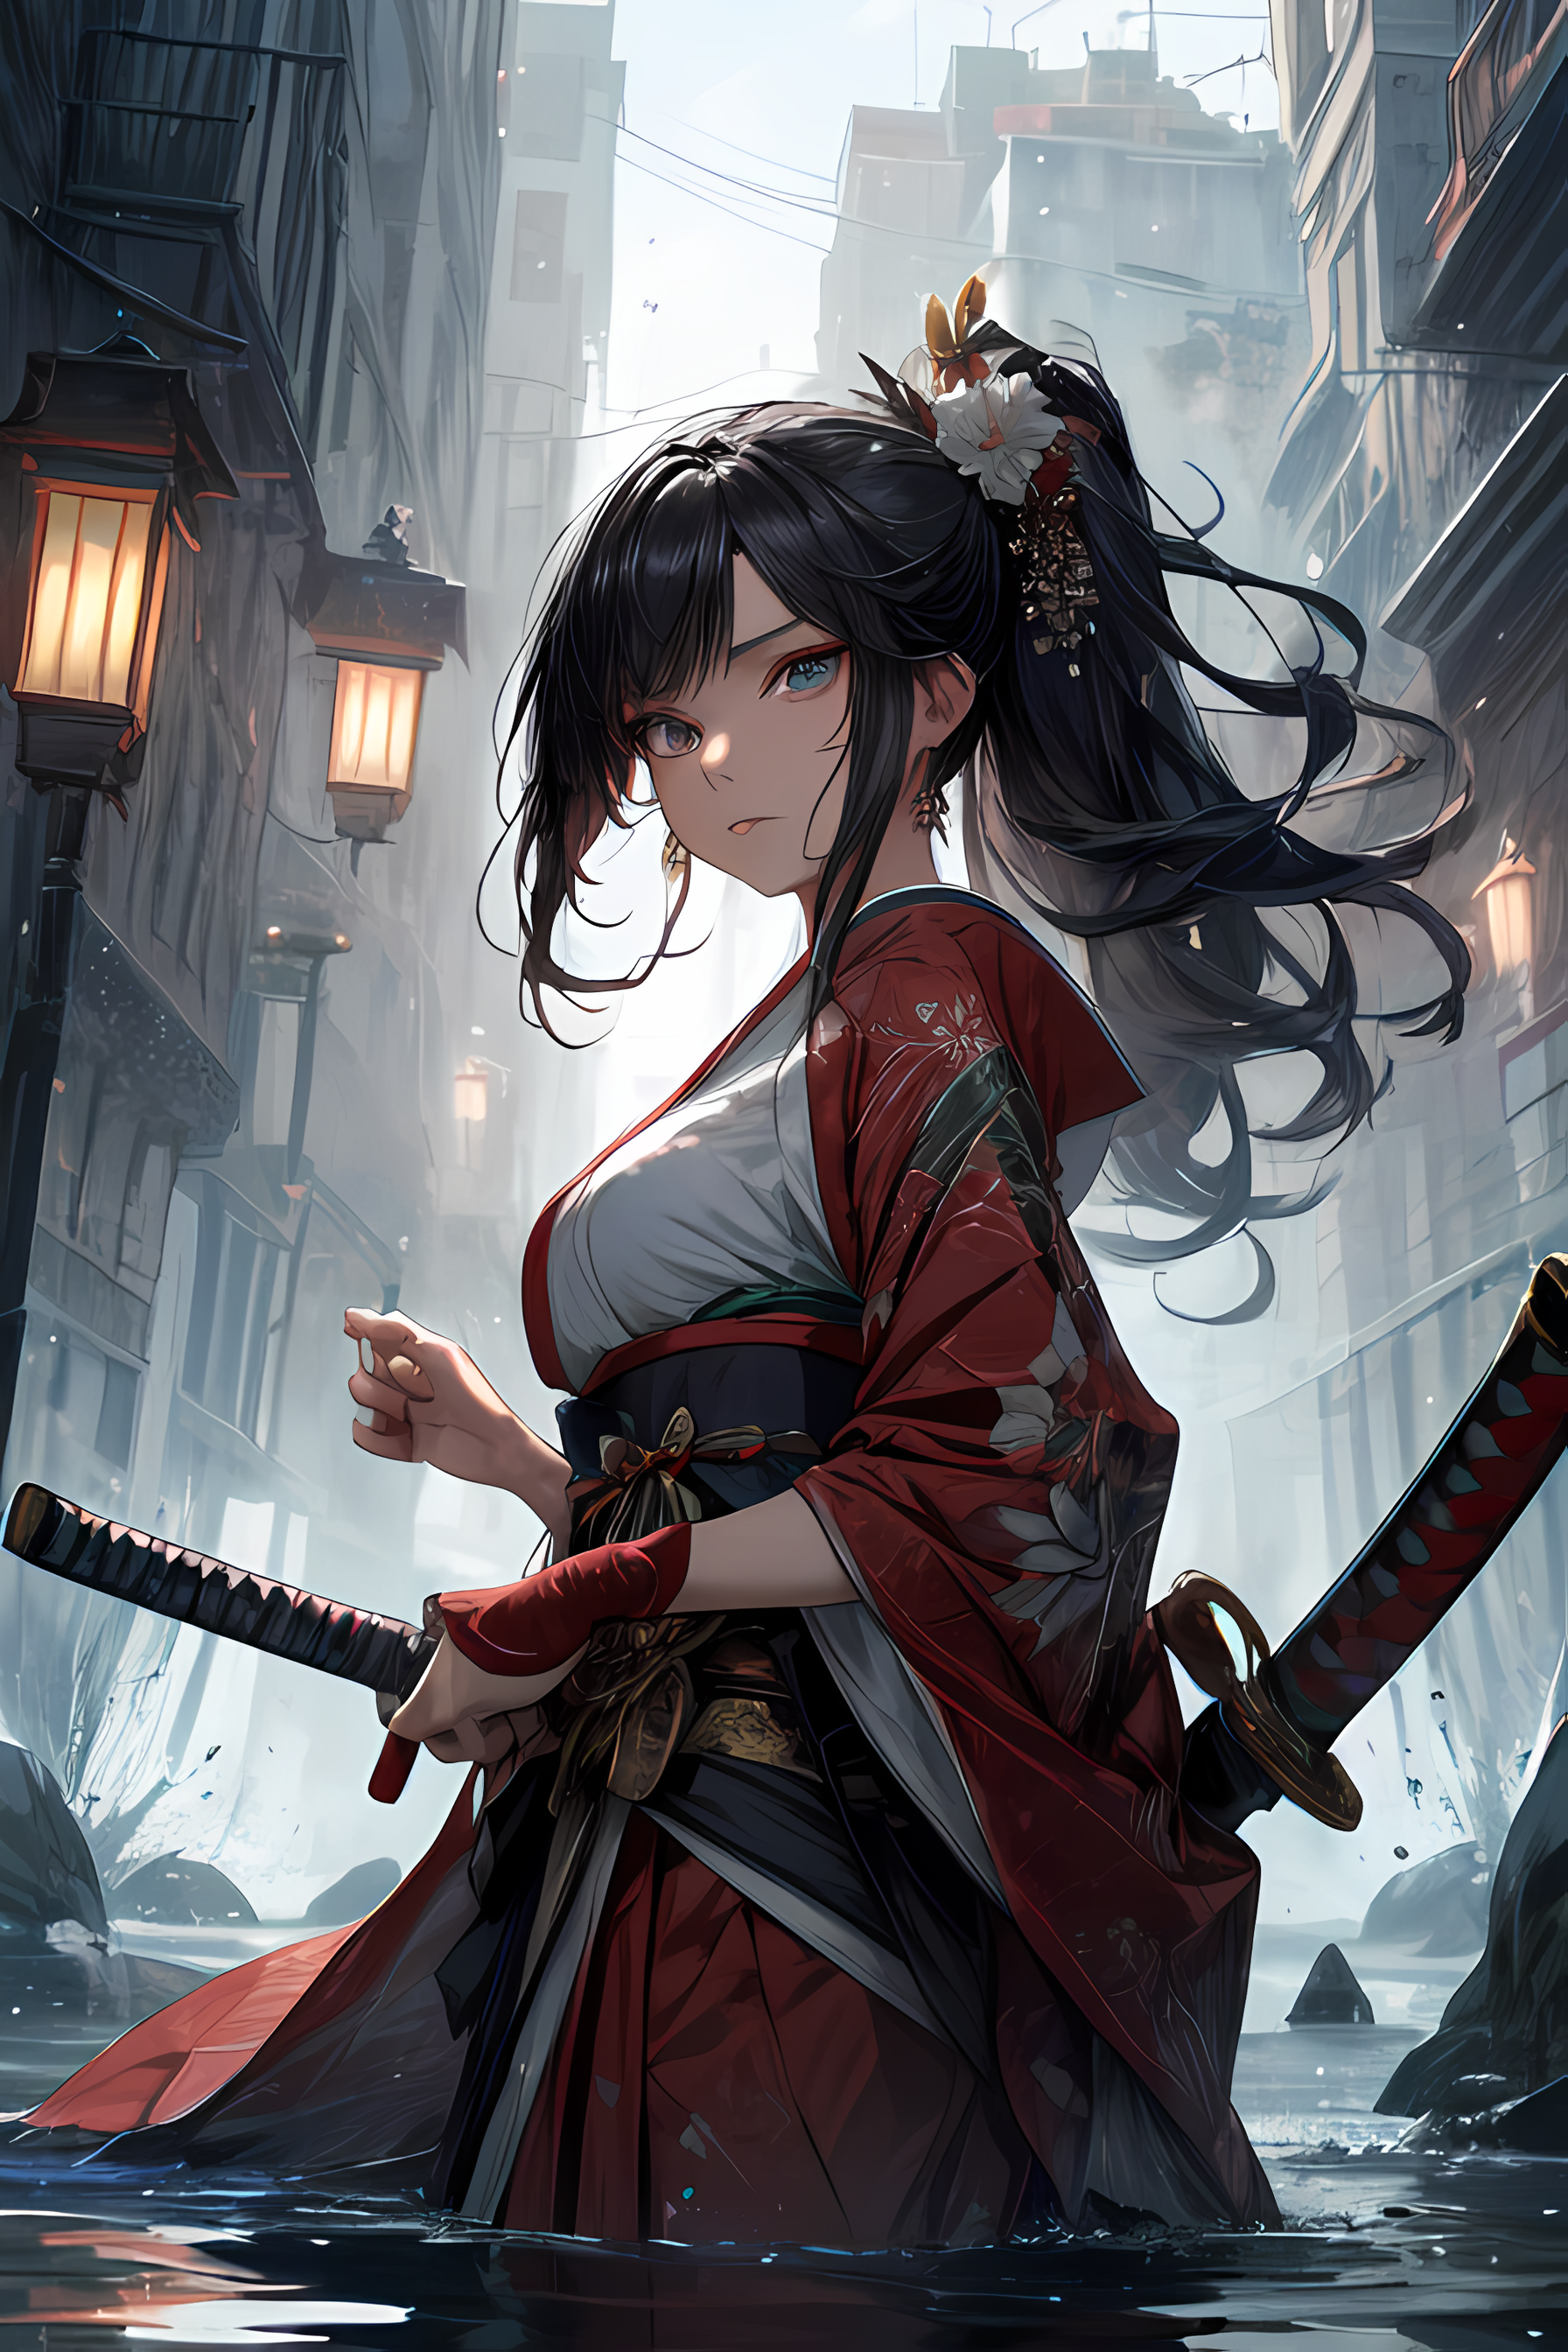 AI Art: Samurai girl by @ThatDude